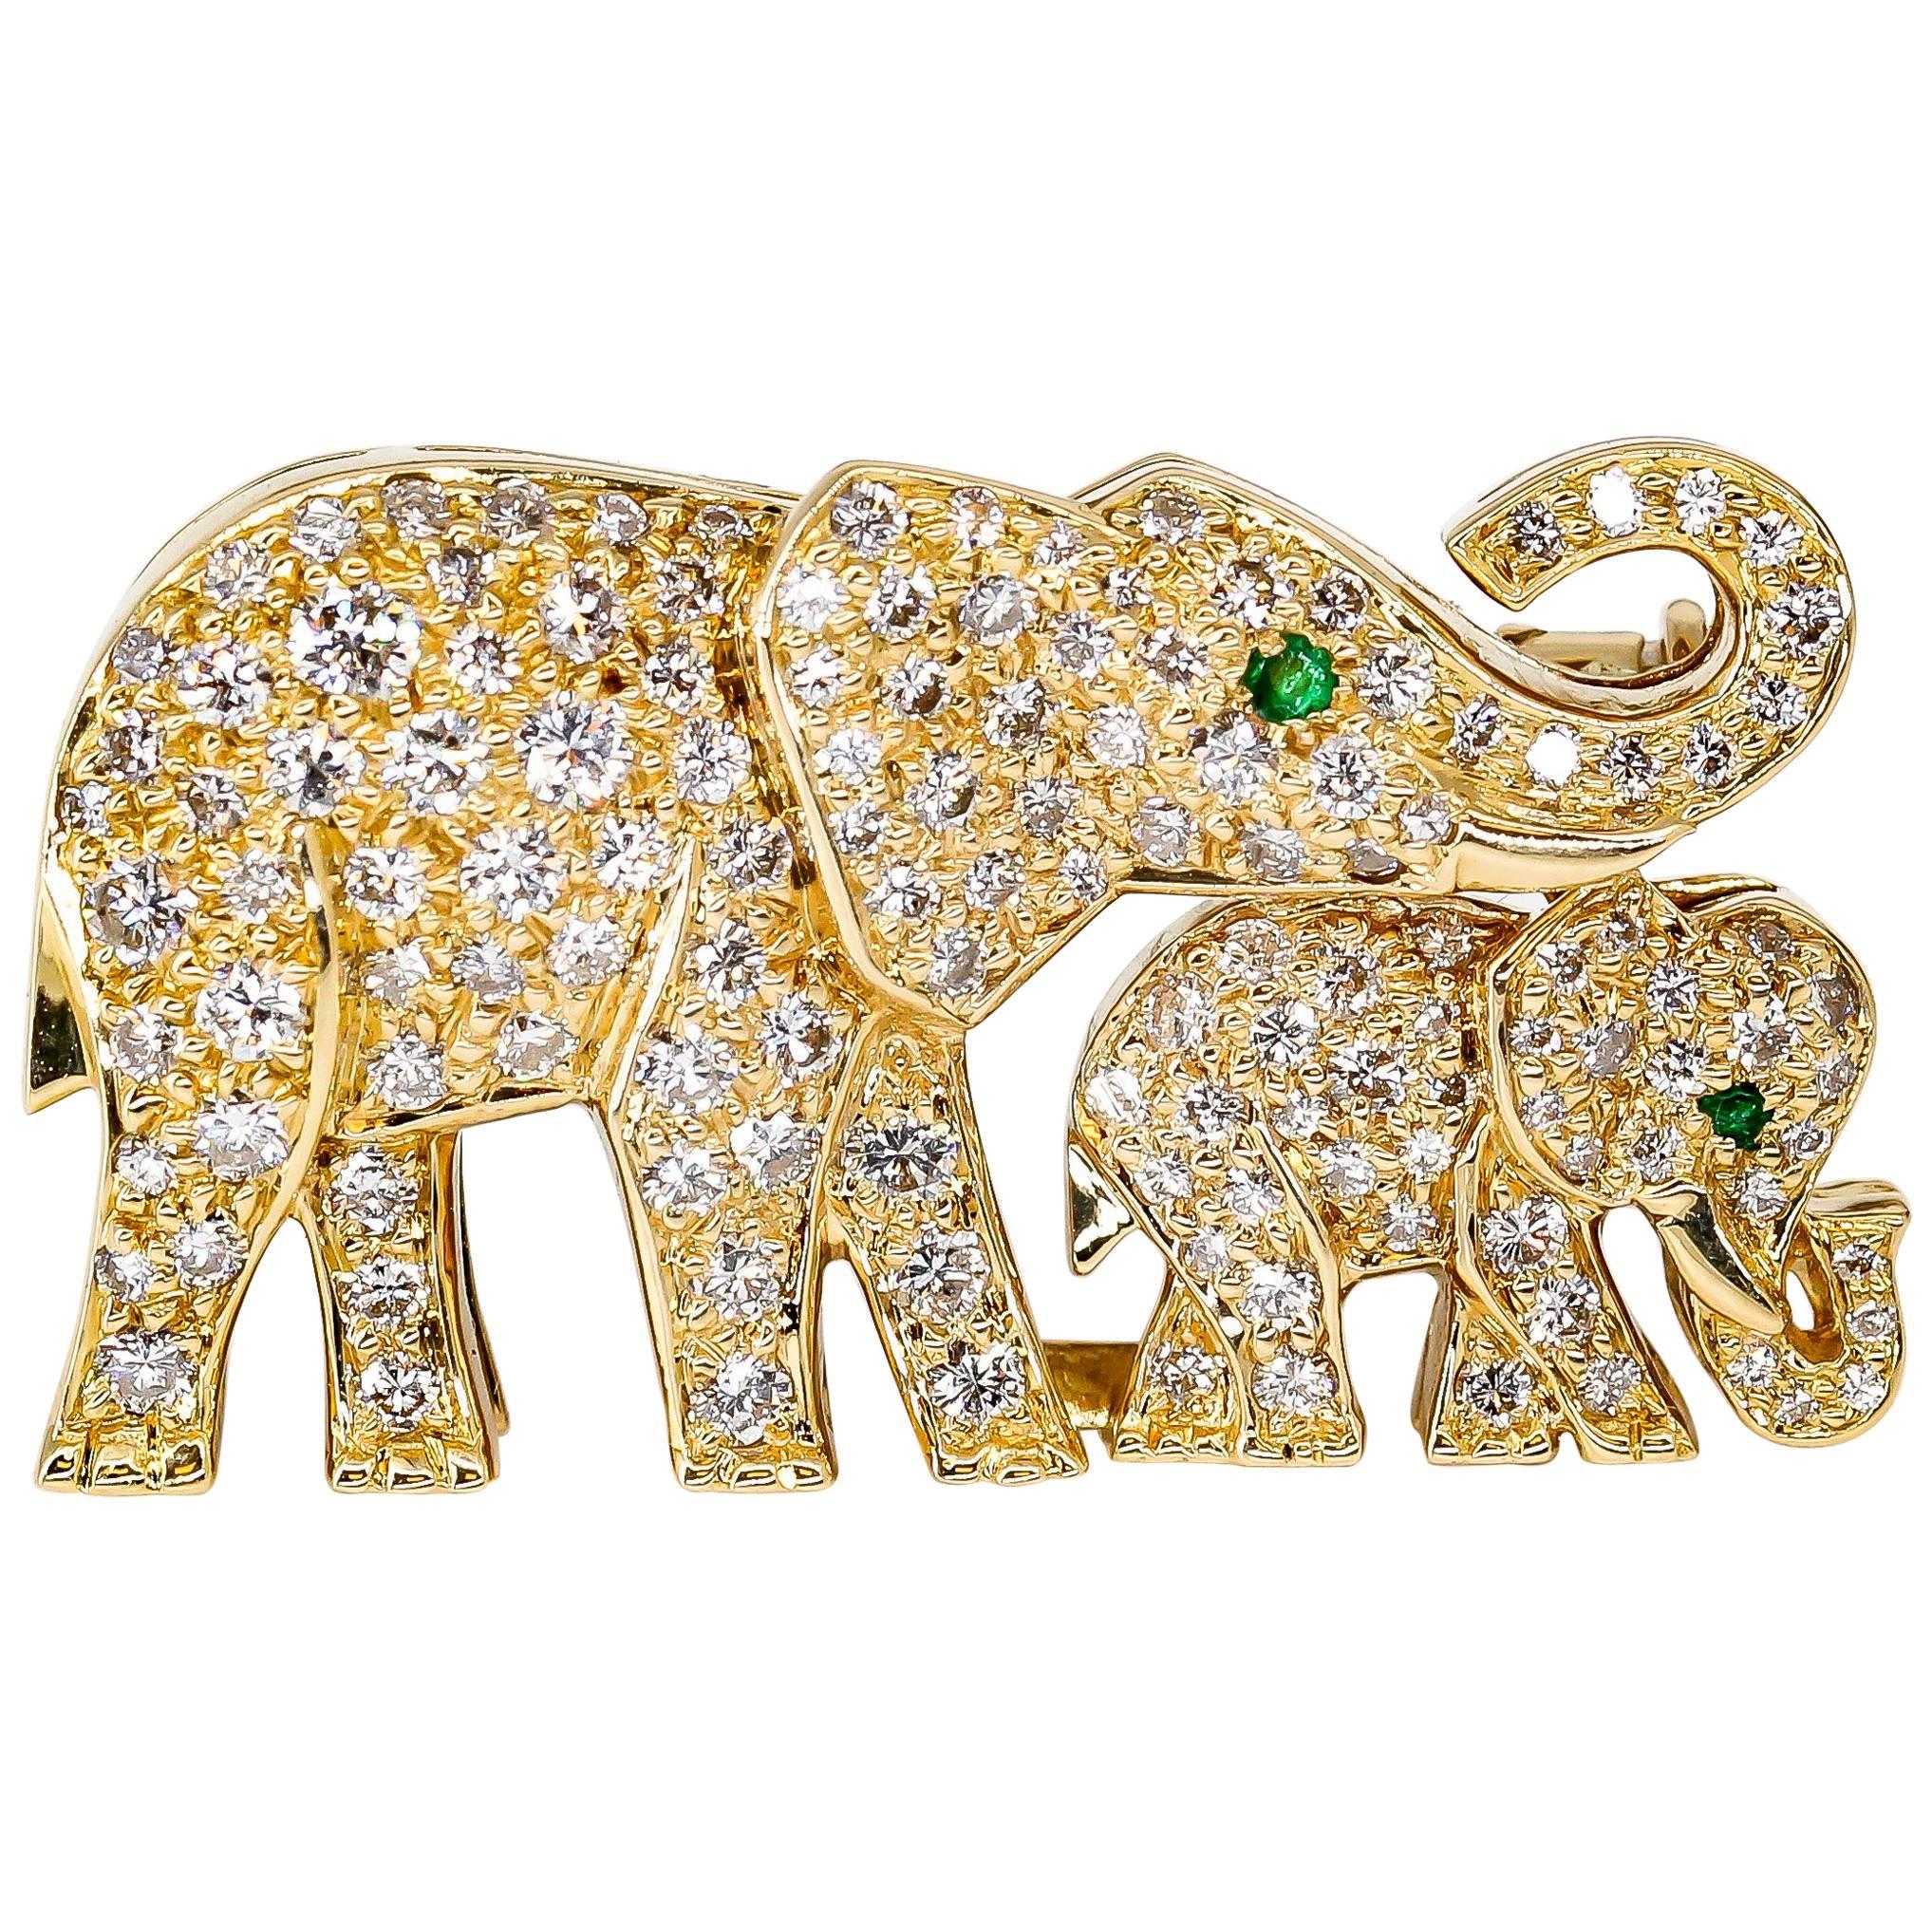 Cartier Diamond, Emerald and Yellow Gold Elephant Brooch